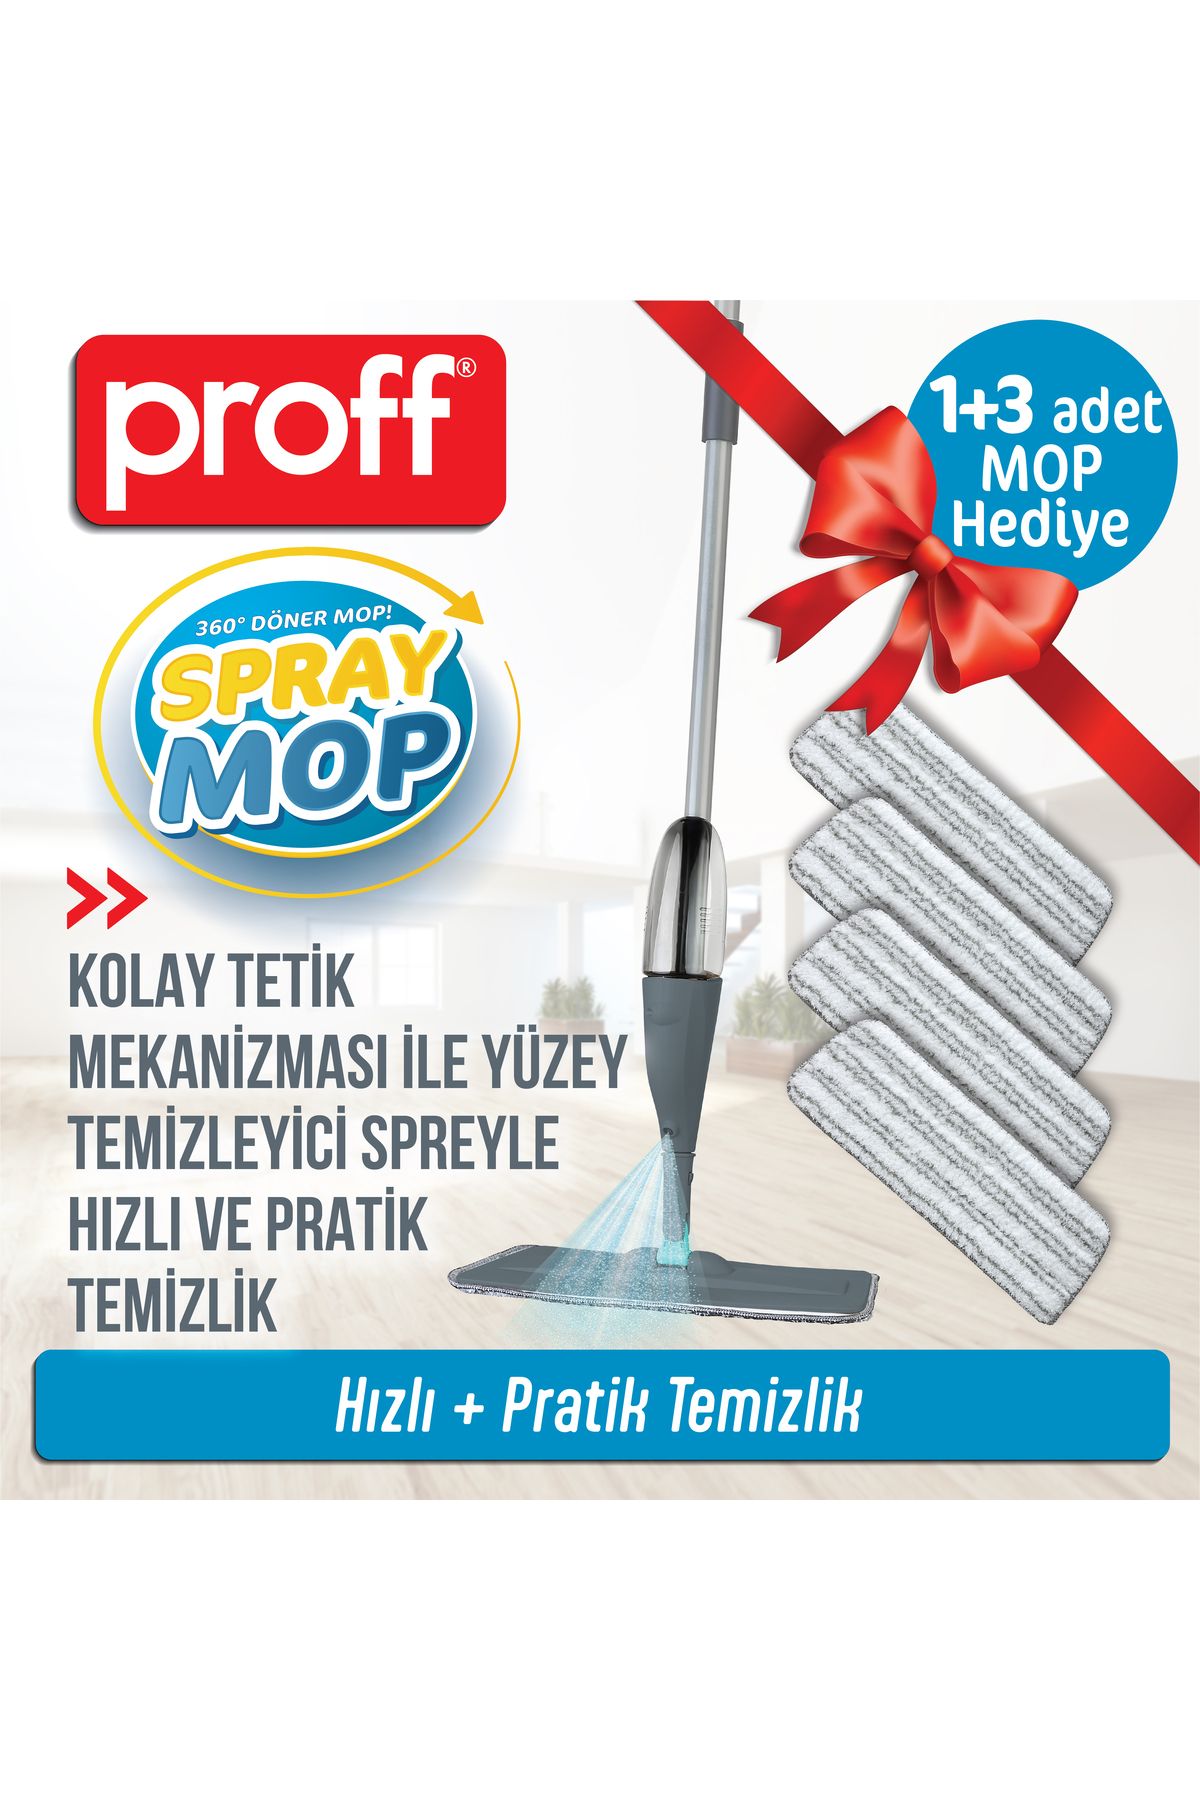 Proff Sprey Mop 1 3 Adet Yedek Mop